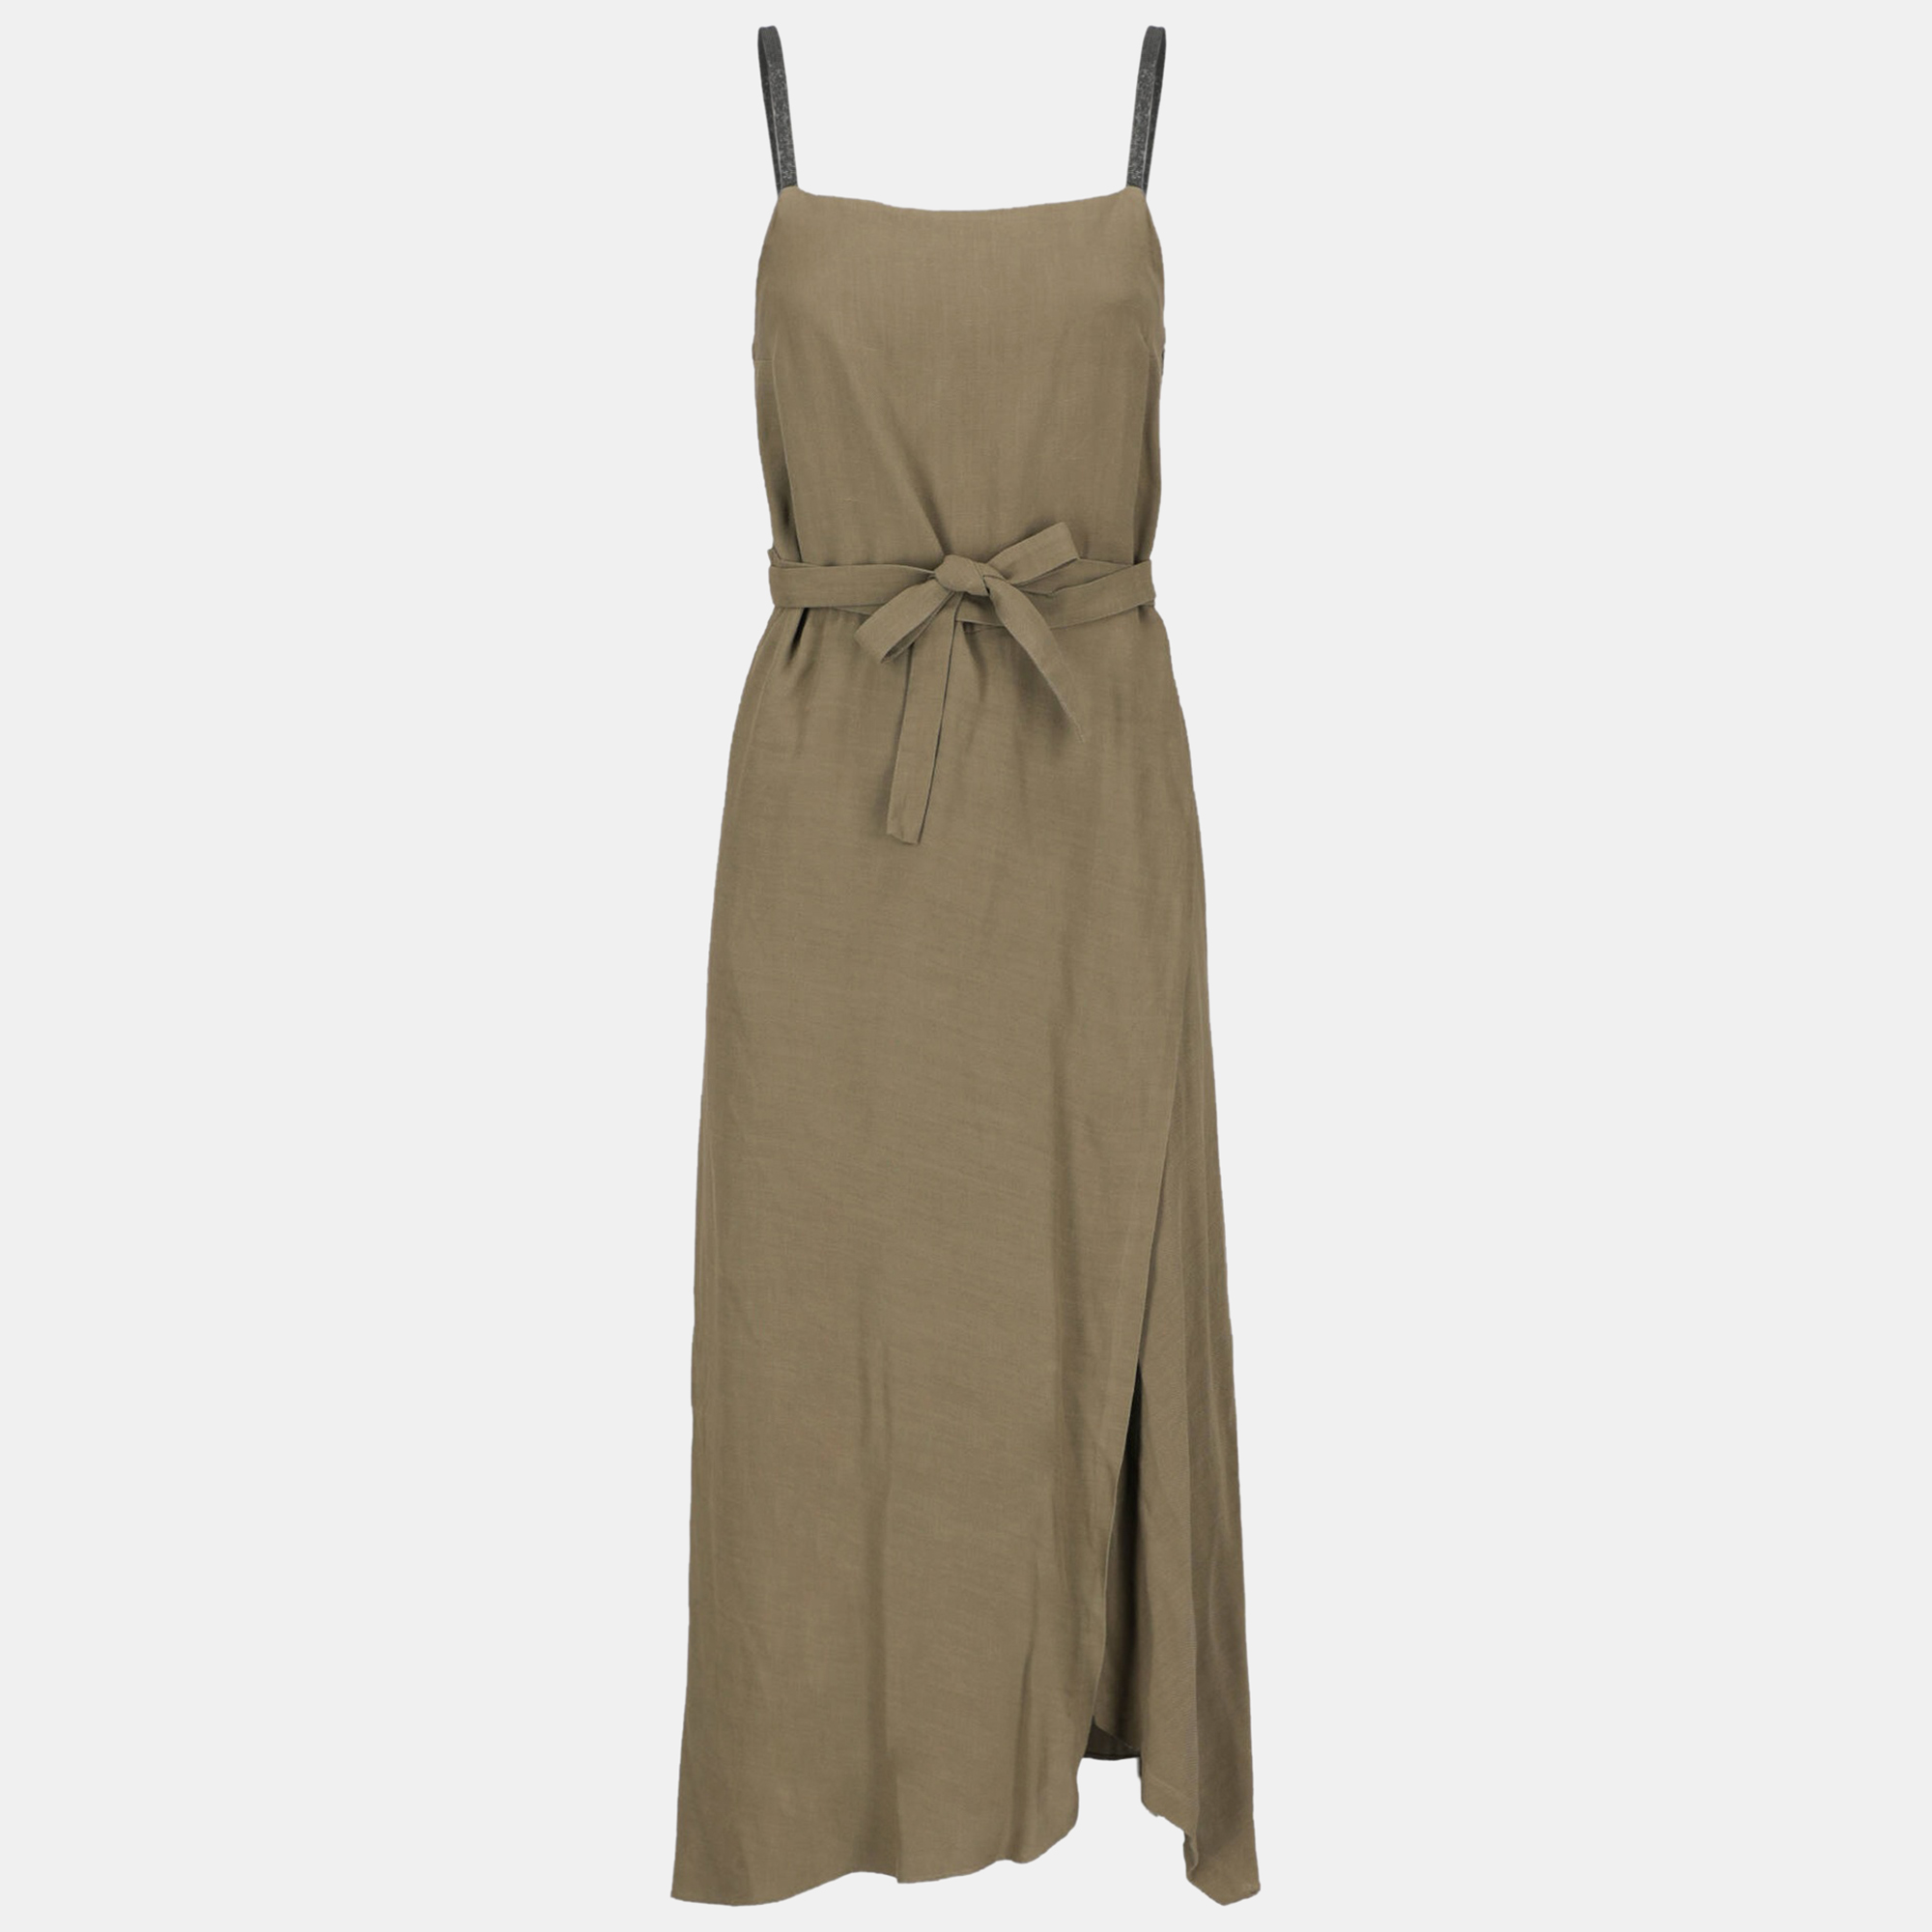 Brunello Cucinelli  Women's Eco-Friendly Fabric Longuette Dress - Brown - S